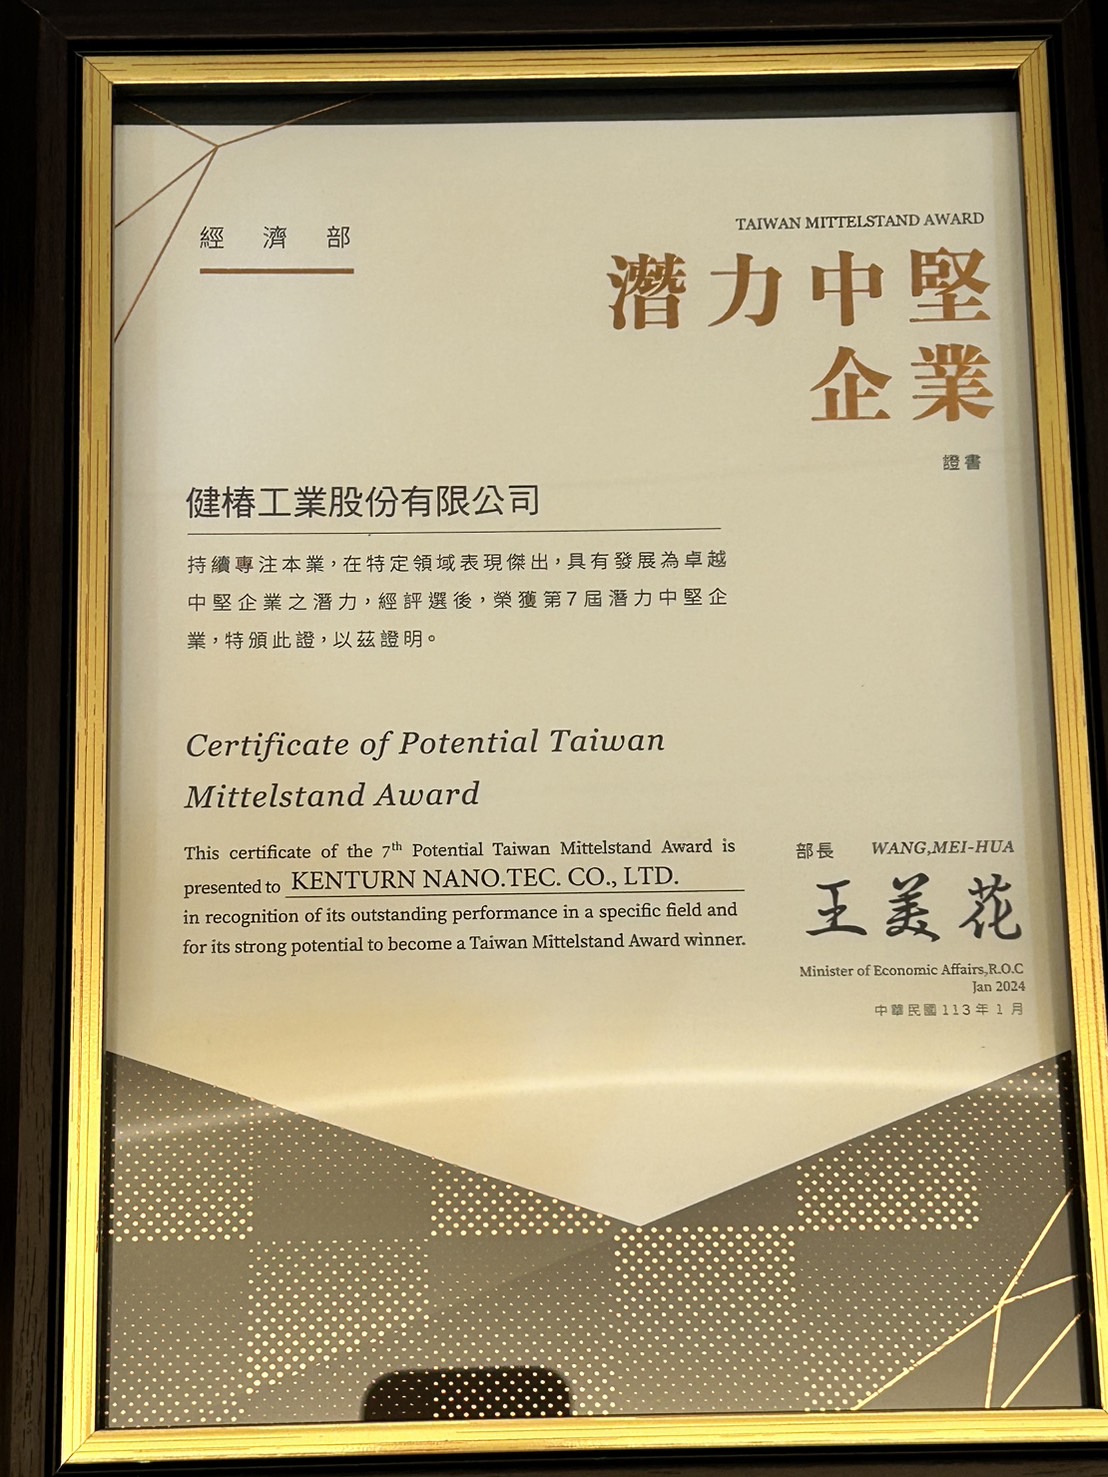 Kenturn Nano. Tec. Co., Ltd. is awarded the 7th Annual "Potential Taiwan Mittelstand Award"